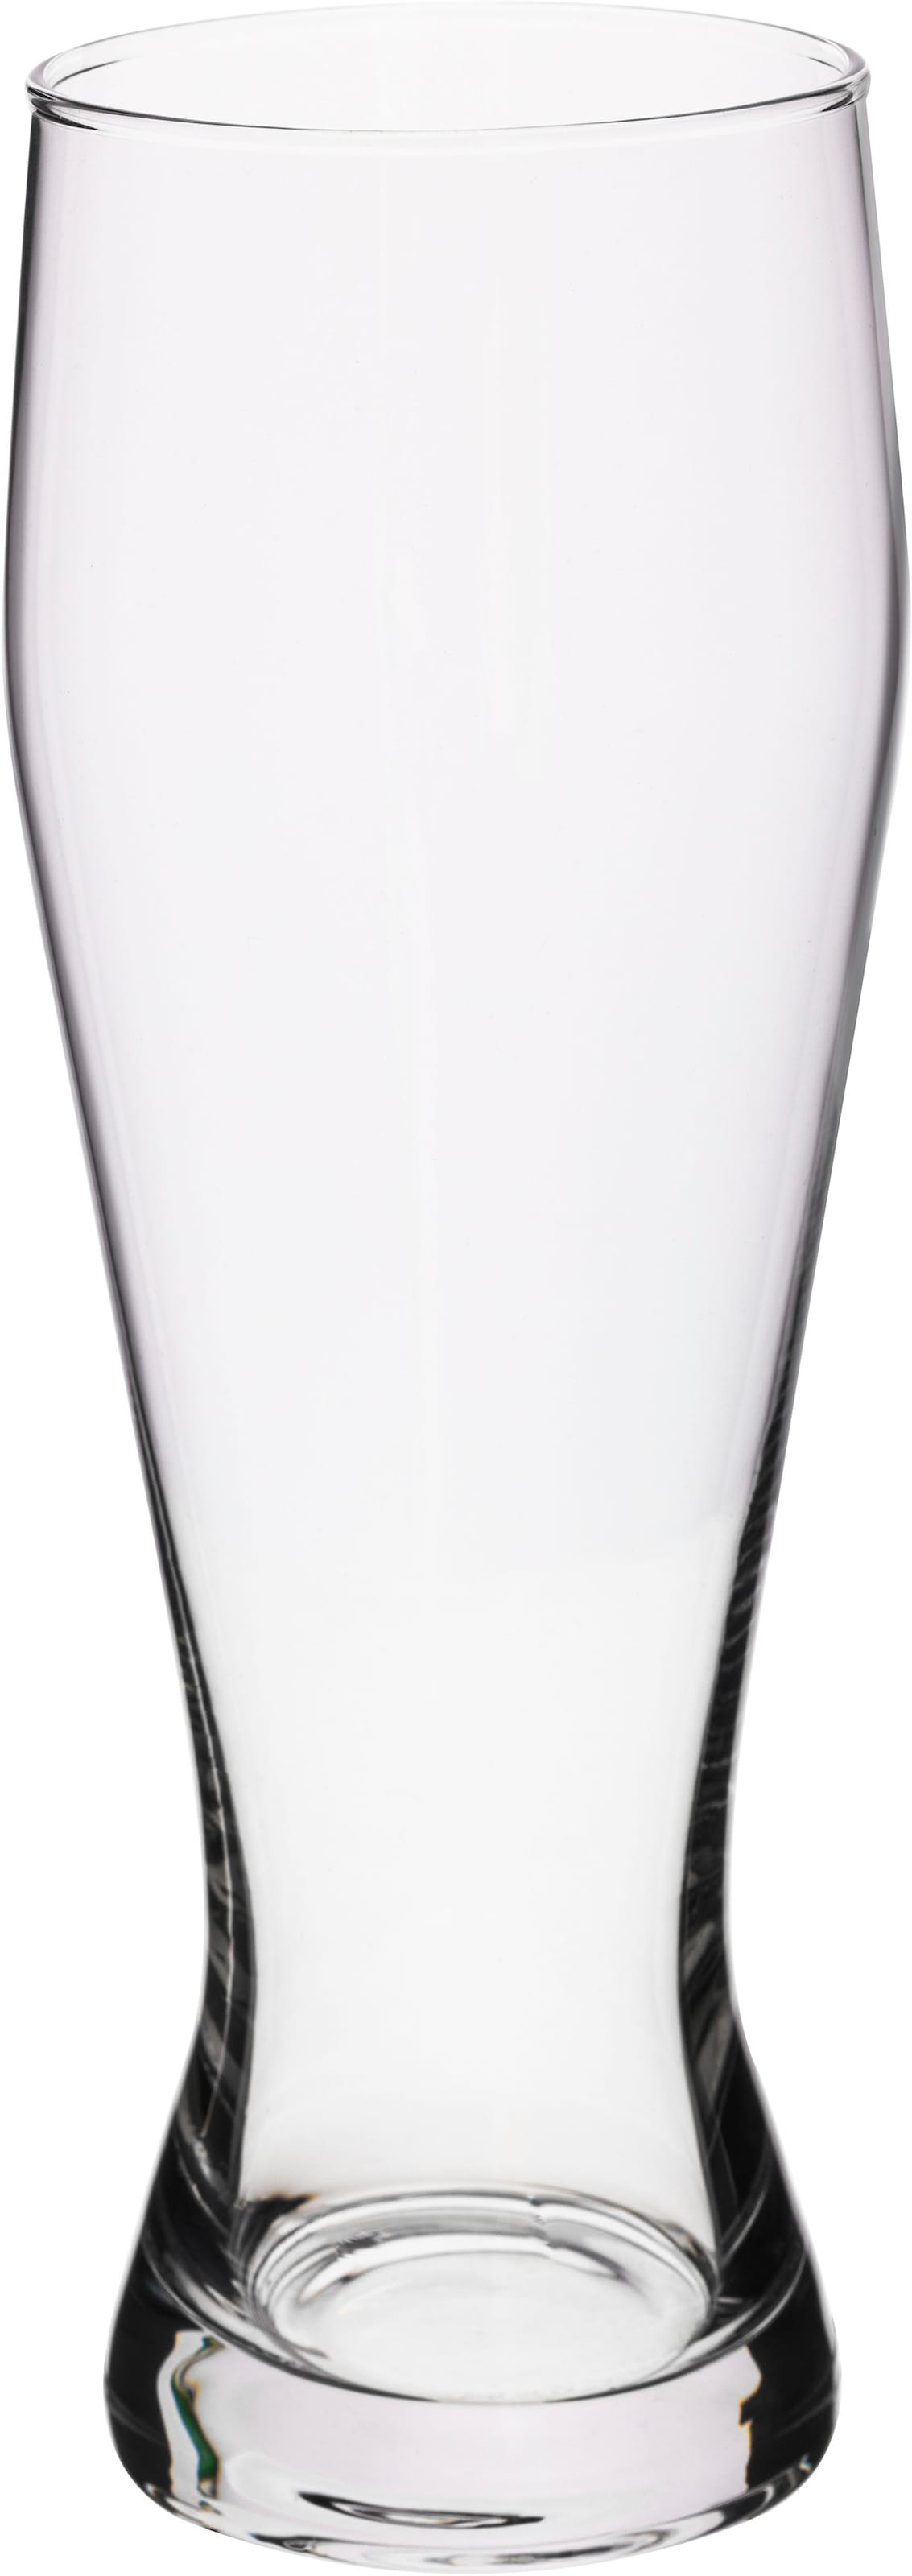 van Well Bierglas "Weizenbierglas", (Set, 6 tlg., 6 Weizenbiergläser 0,3l), 0,3 L, geeicht, spülmaschinenfest, Gastronom